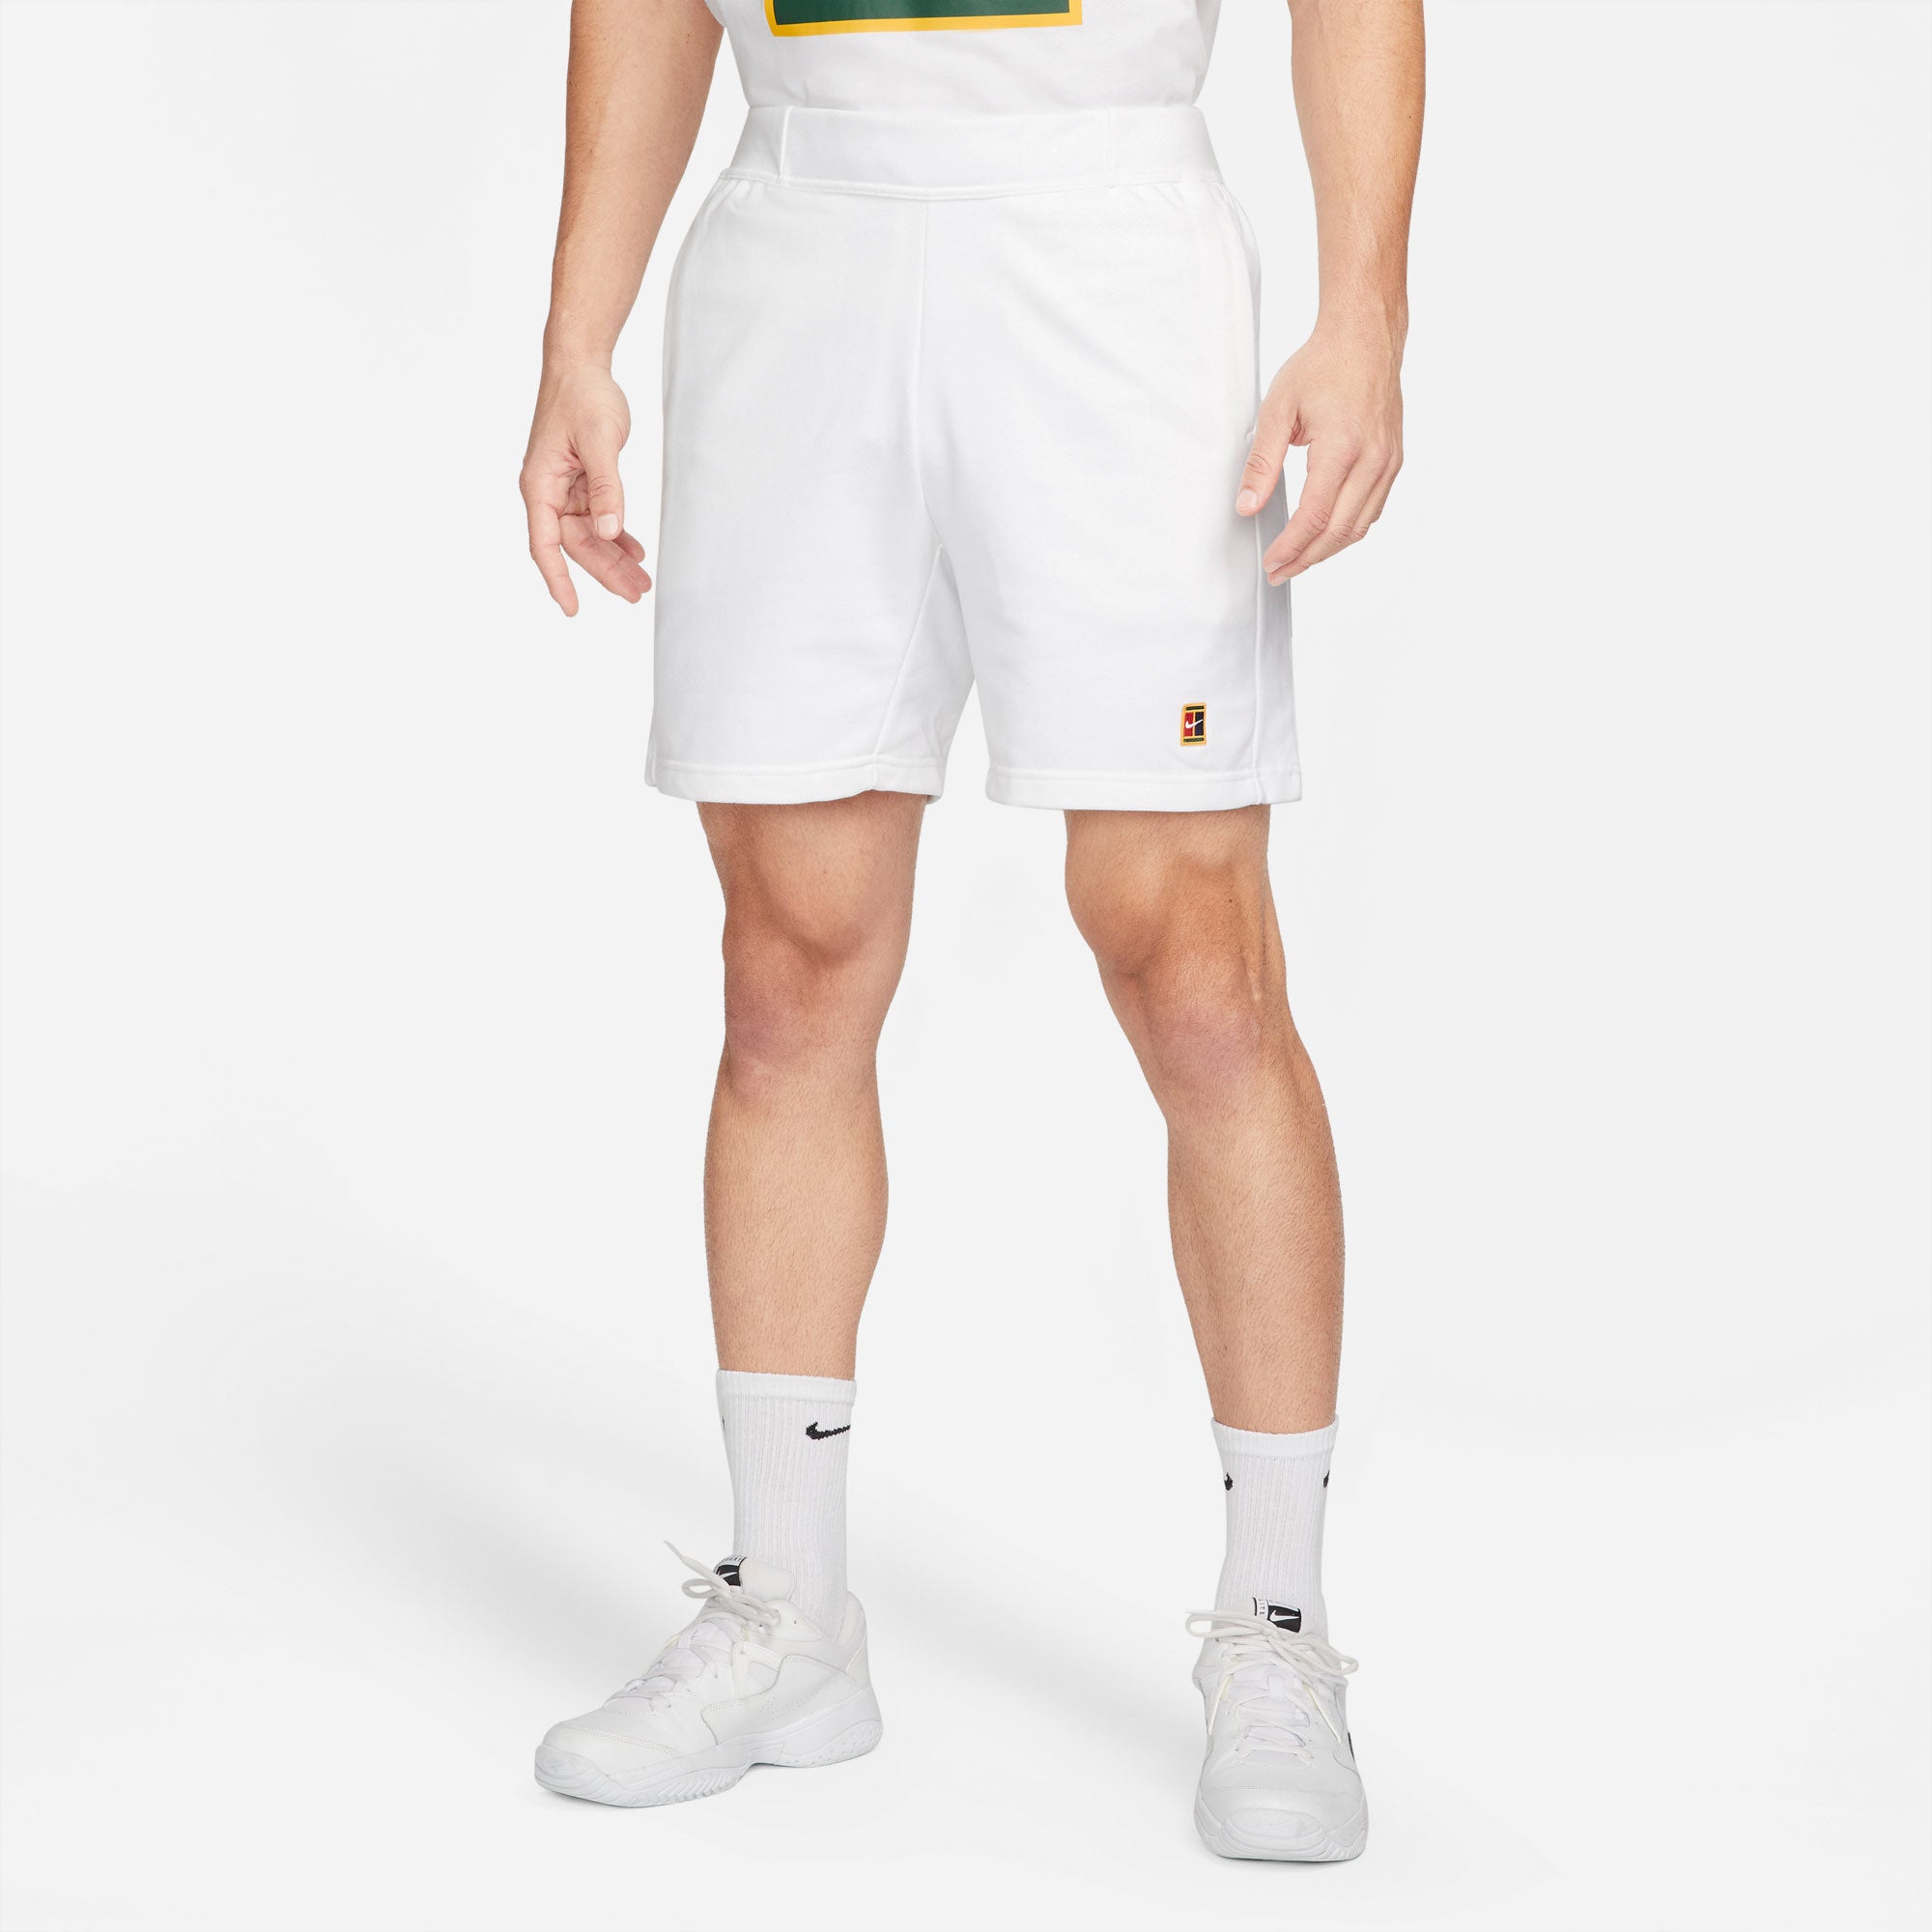 NikeCourt Heritage Men's Fleece Tennis Shorts White (1)